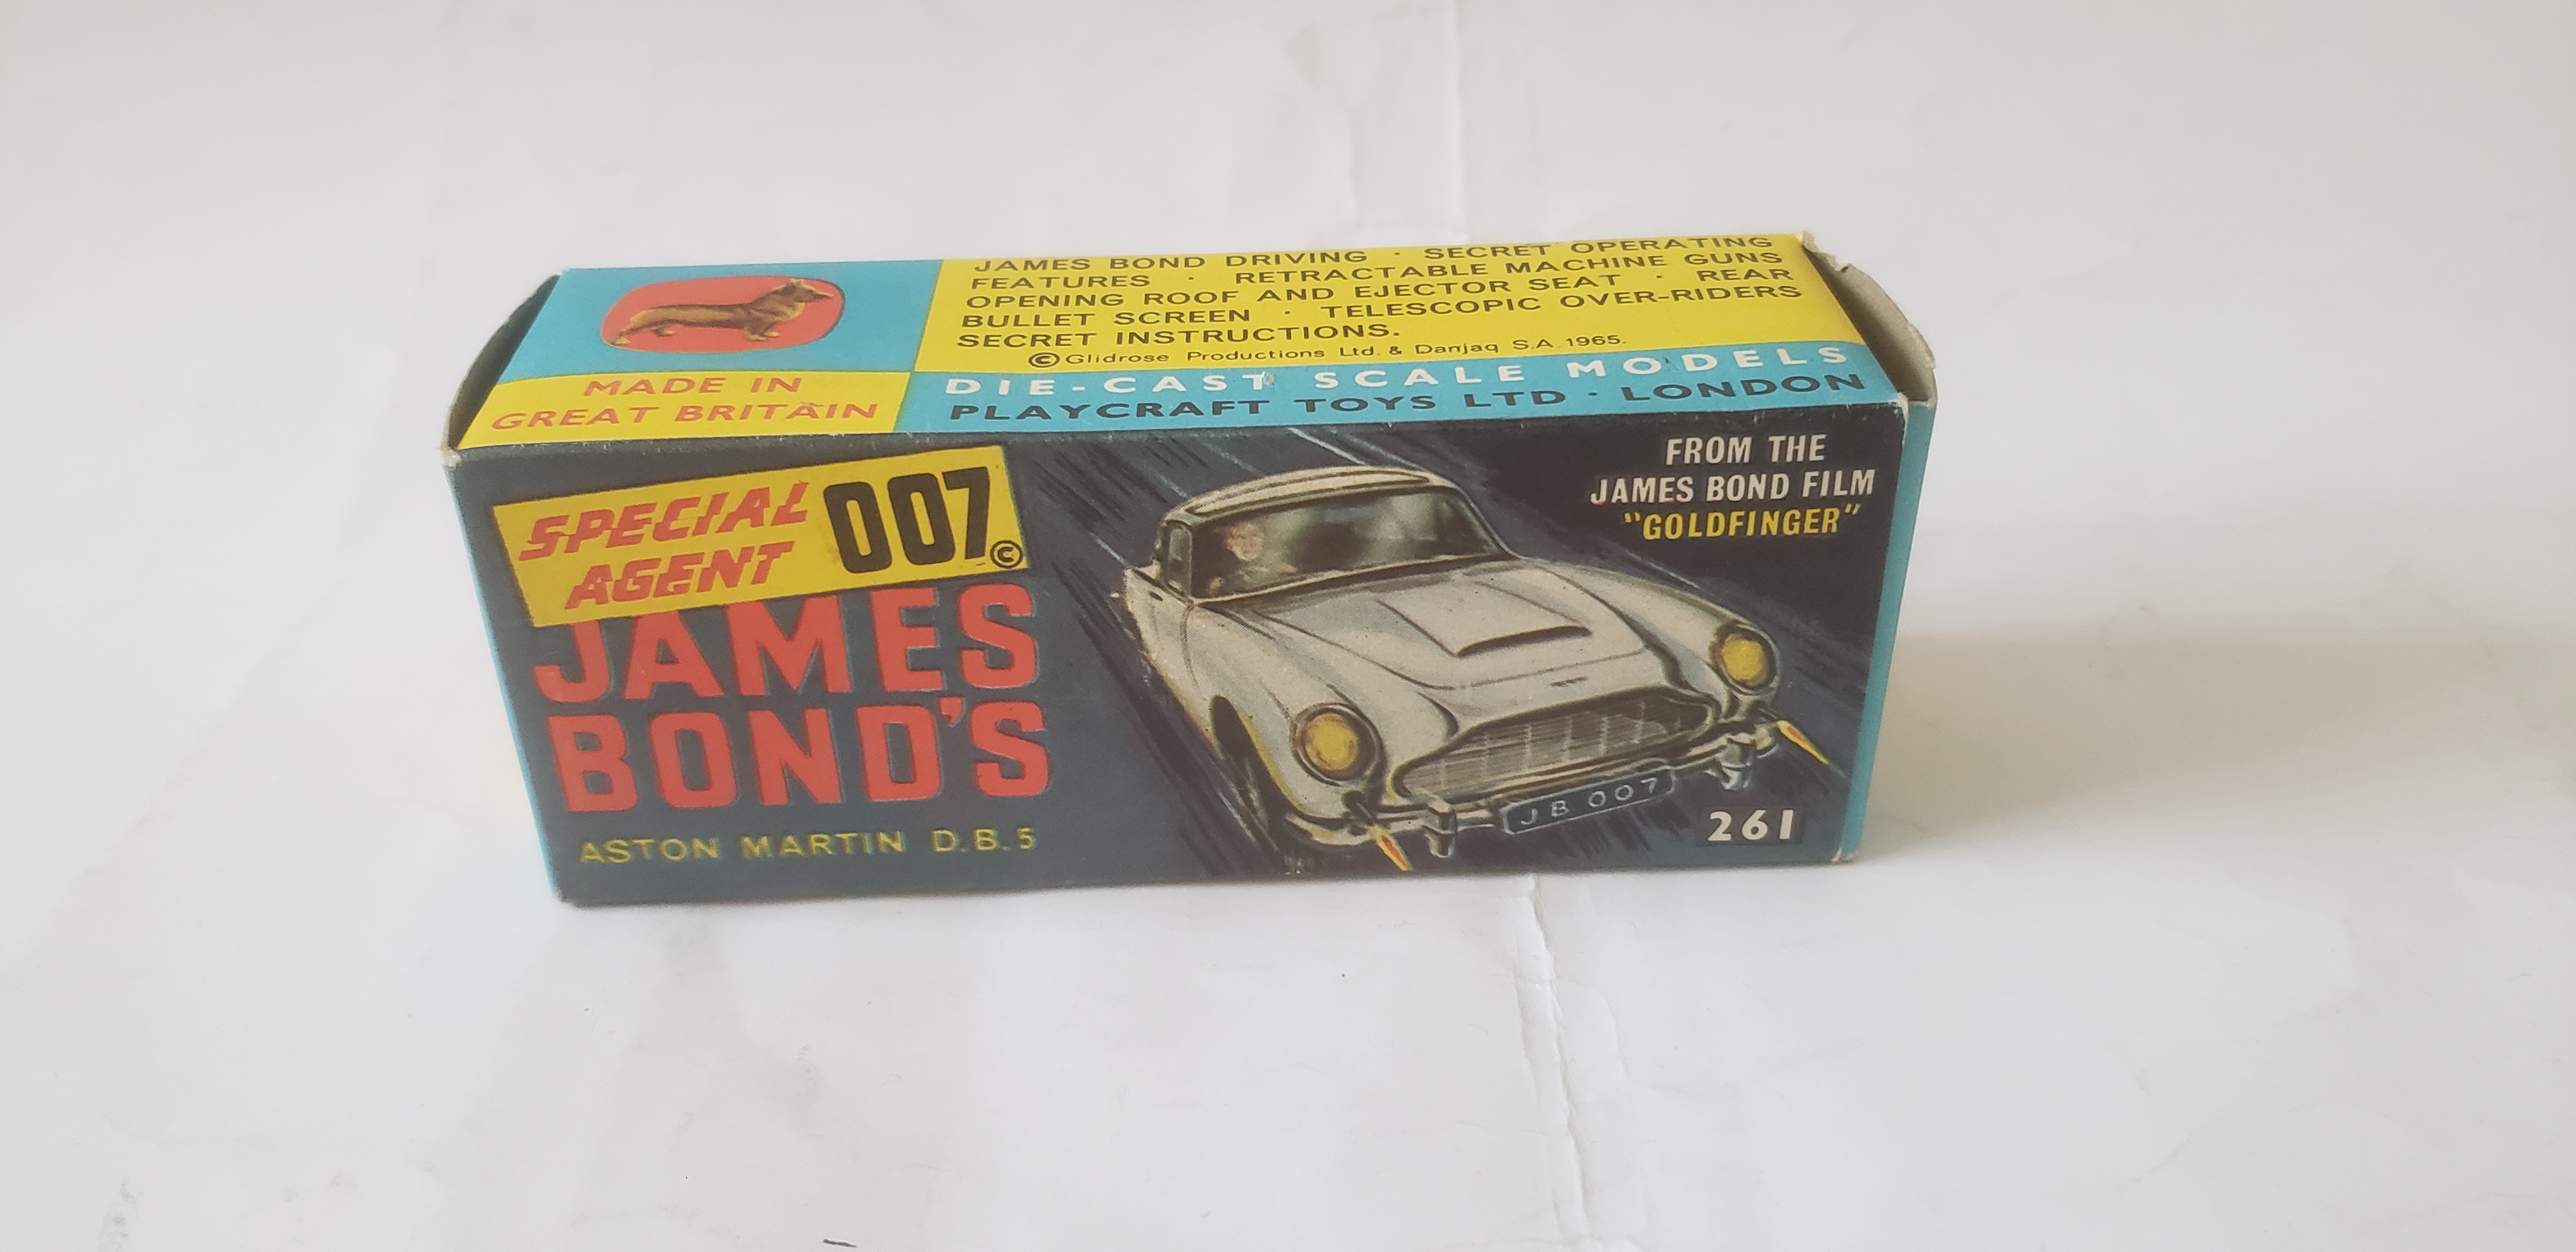 JAMES BOND, Corgi Toy no. 261 James Bonds Aston Martin D.B.5, with box, VG to EX - Image 3 of 3